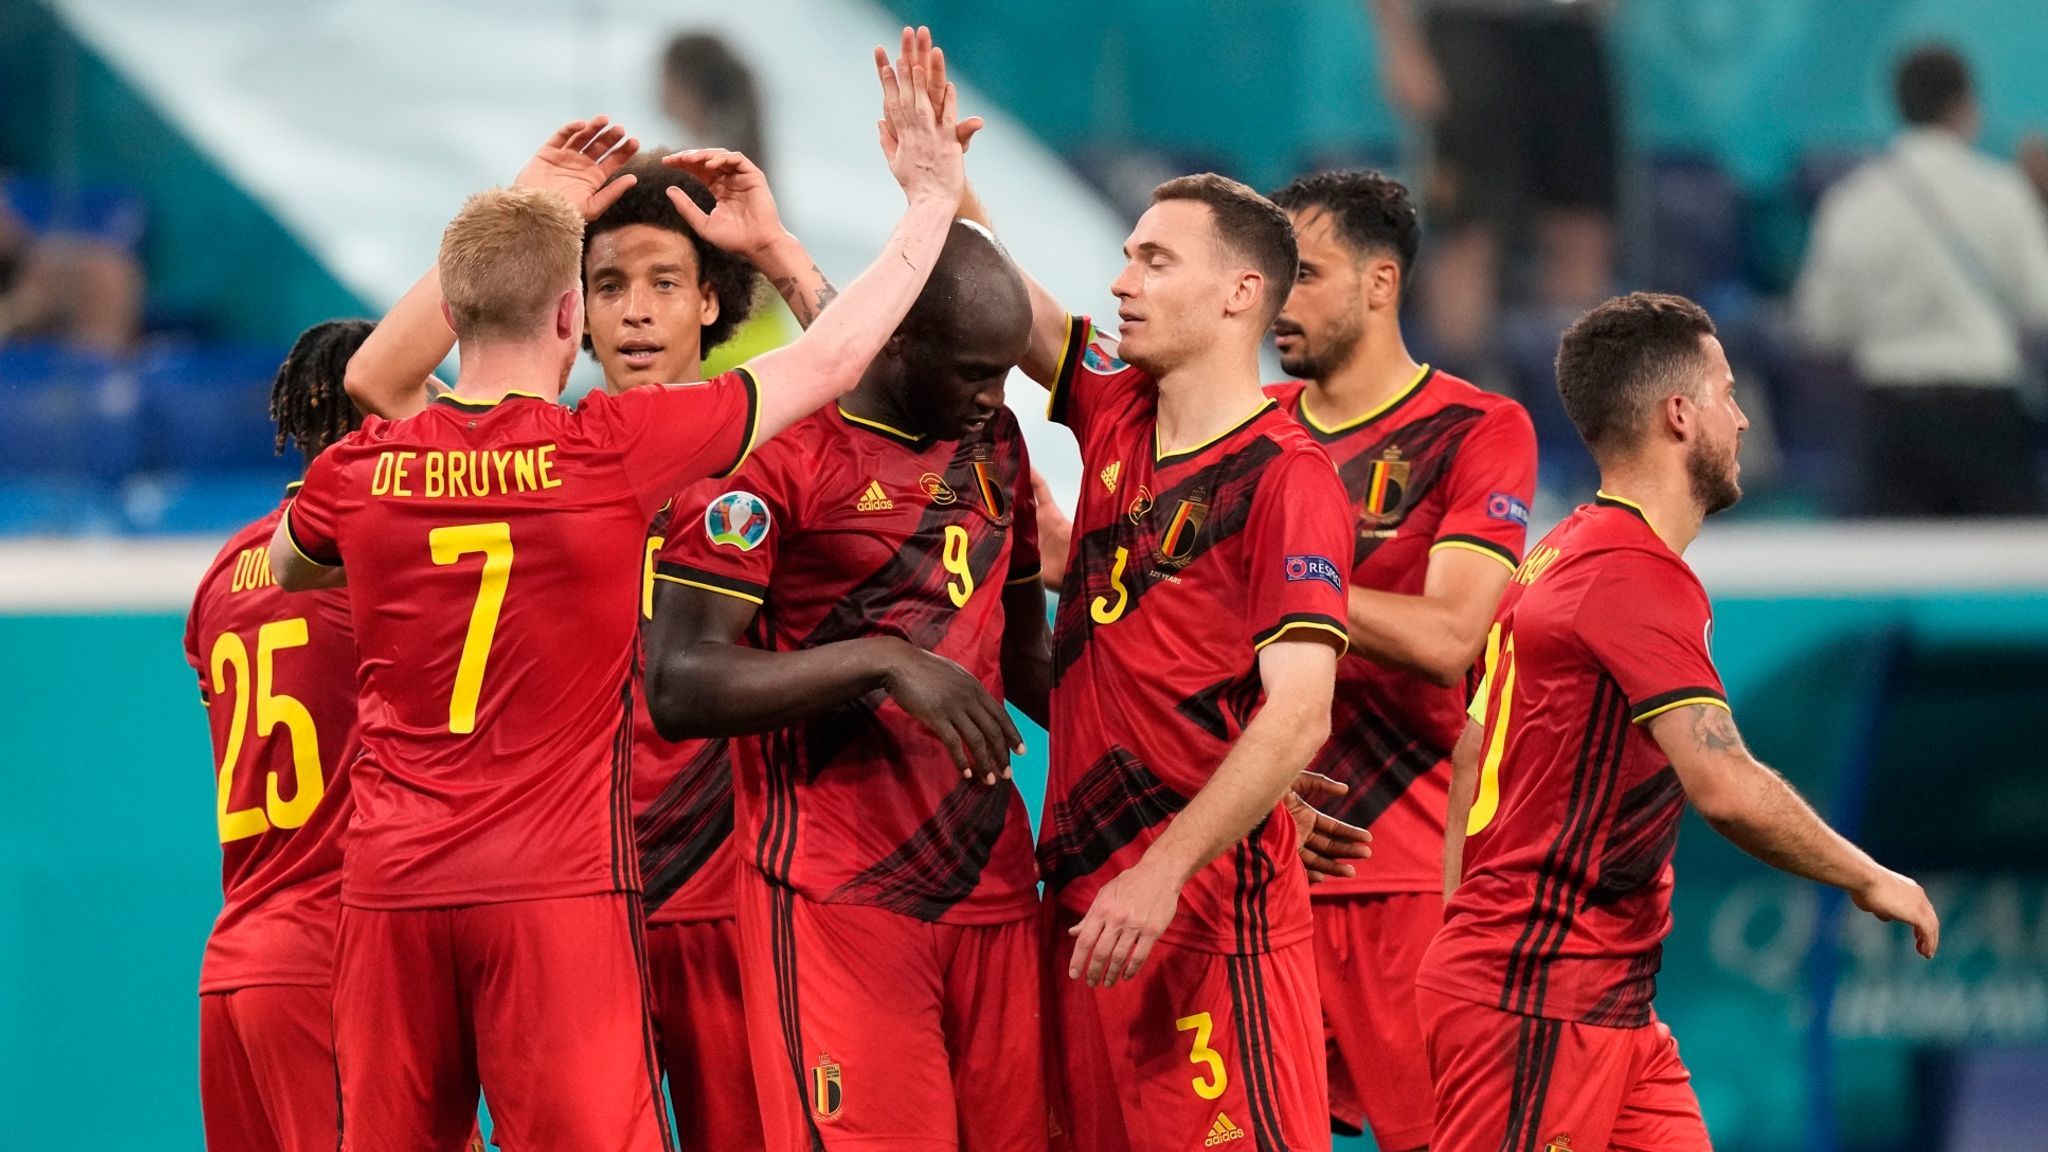 Бельгия — Португалия прогноз 27 июня 2021: ставки и коэффициенты на матч Евро-2020